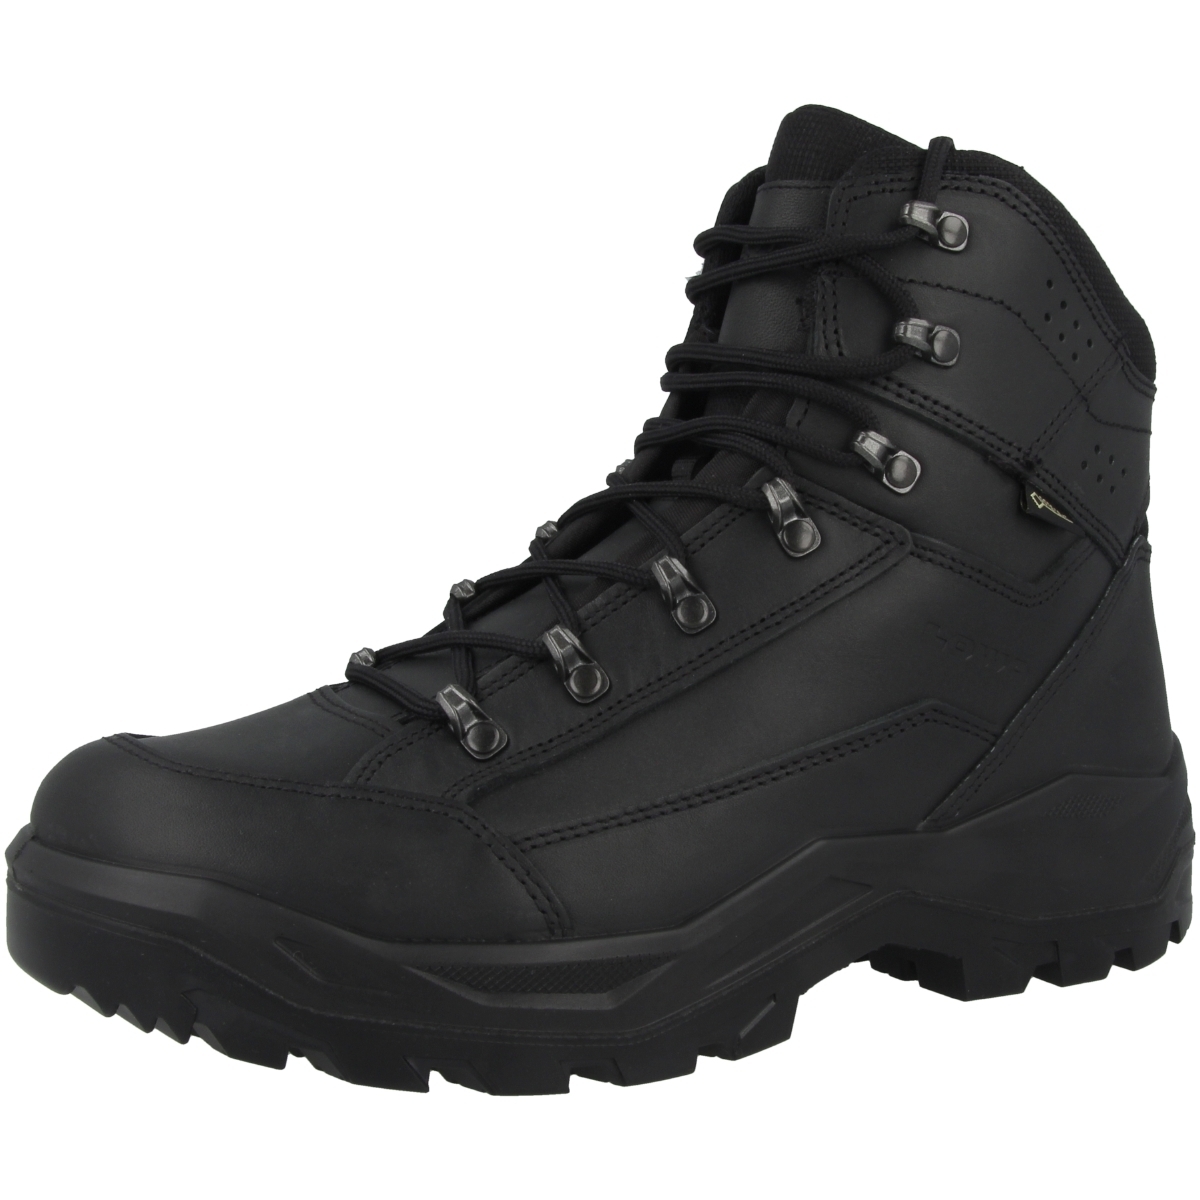 LOWA Renegade II GTX Mid Task Force Outdoor Schuhe schwarz